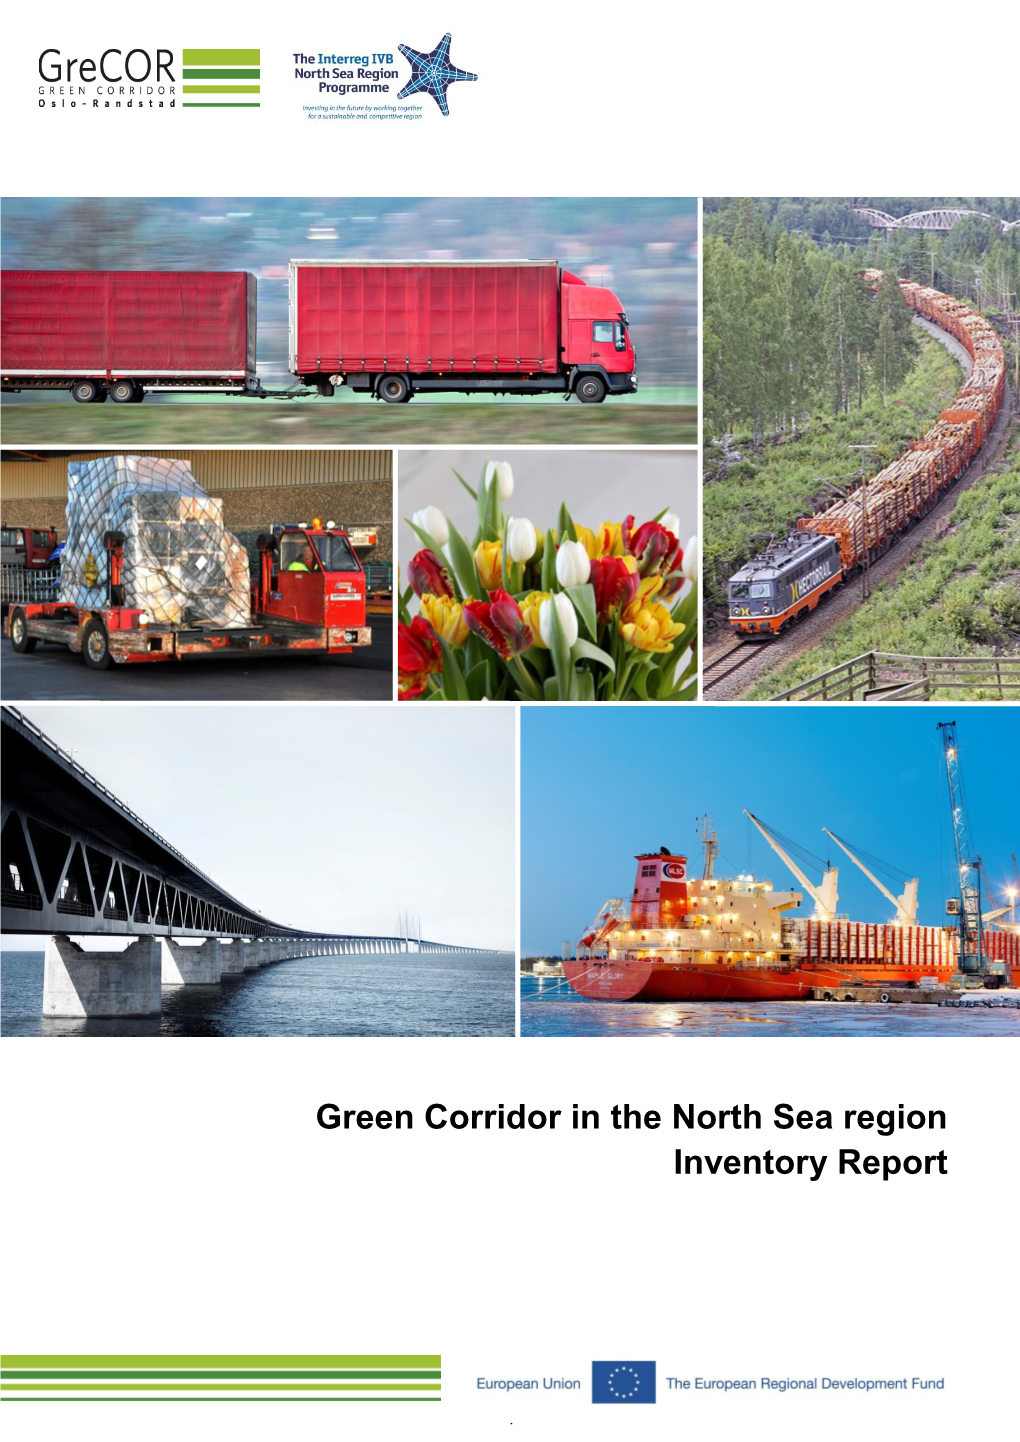 Green Corridor in the North Sea Region Inventory Report